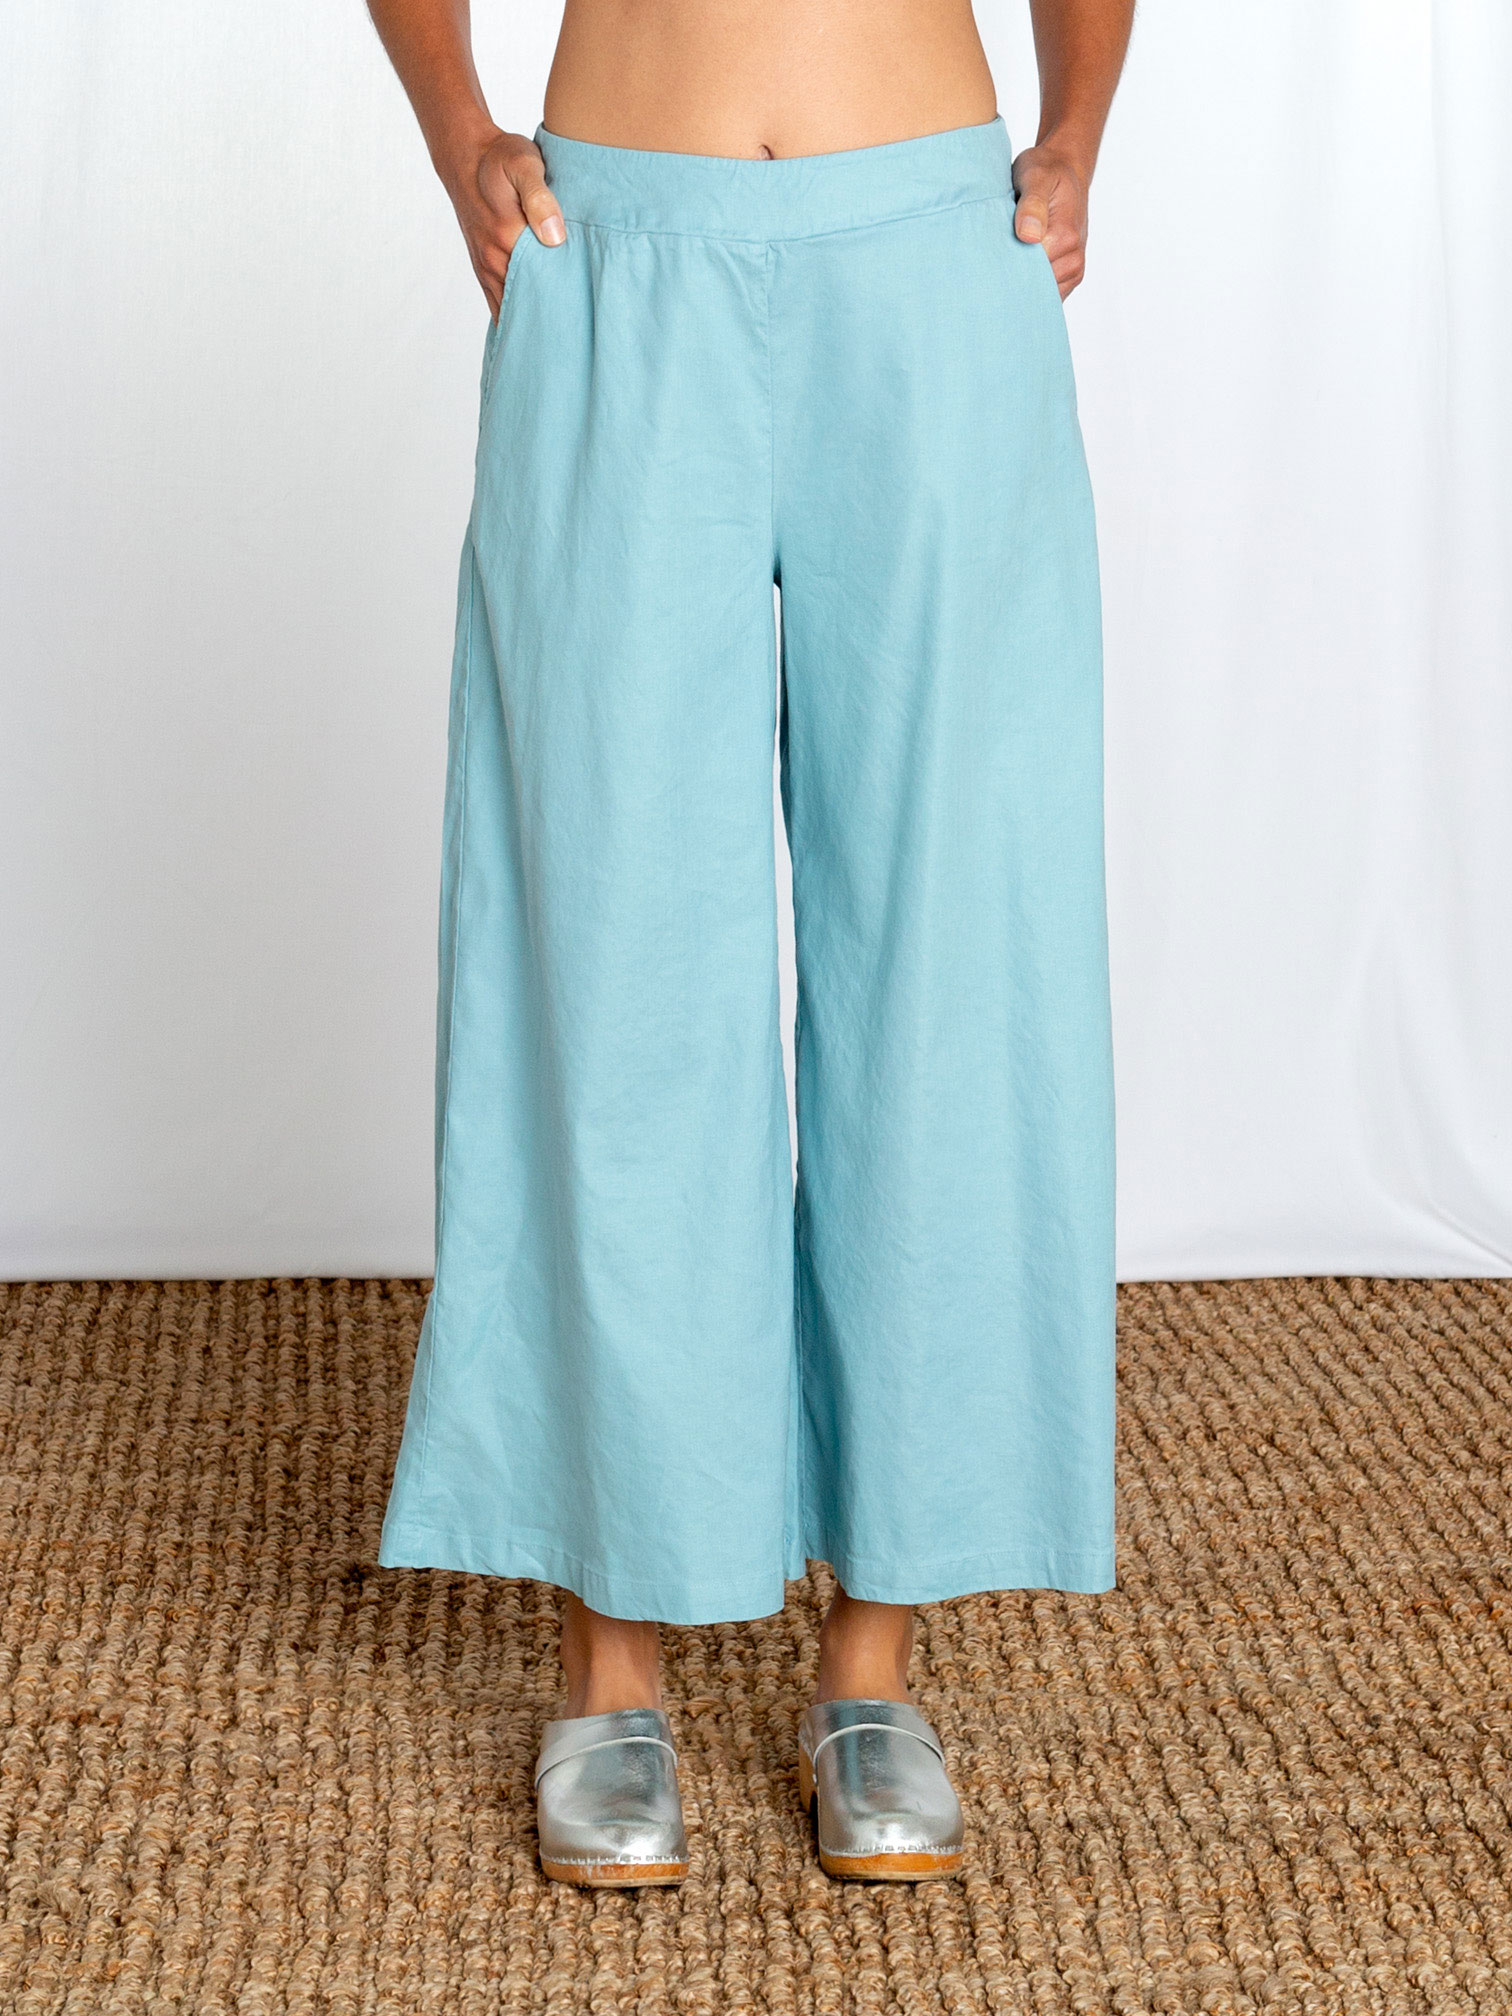 Women's Capri Pants Loose Fit with Pockets 3/4 Pants Drawstring Cropped  Pants US